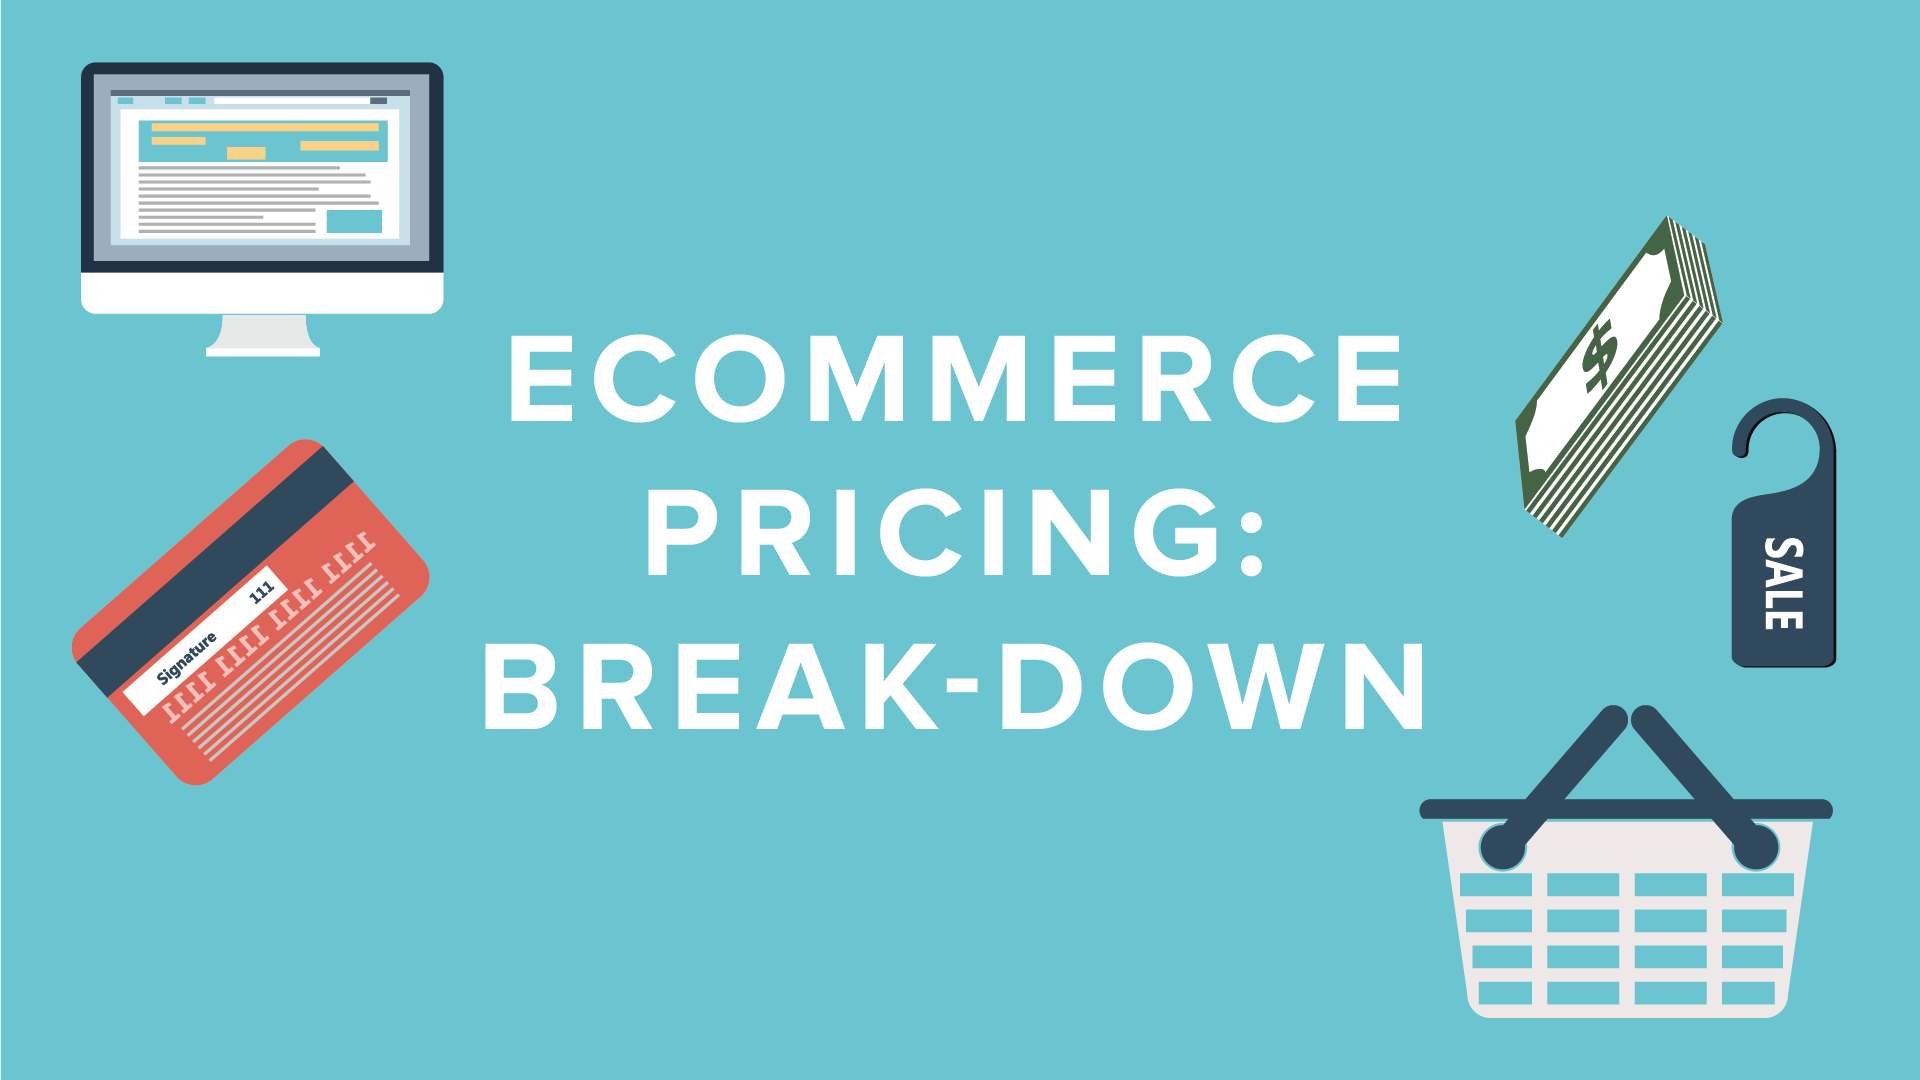 eCommerce Accounts and Pricing: A Break-Down - DigitalChalk Blog thumbnail